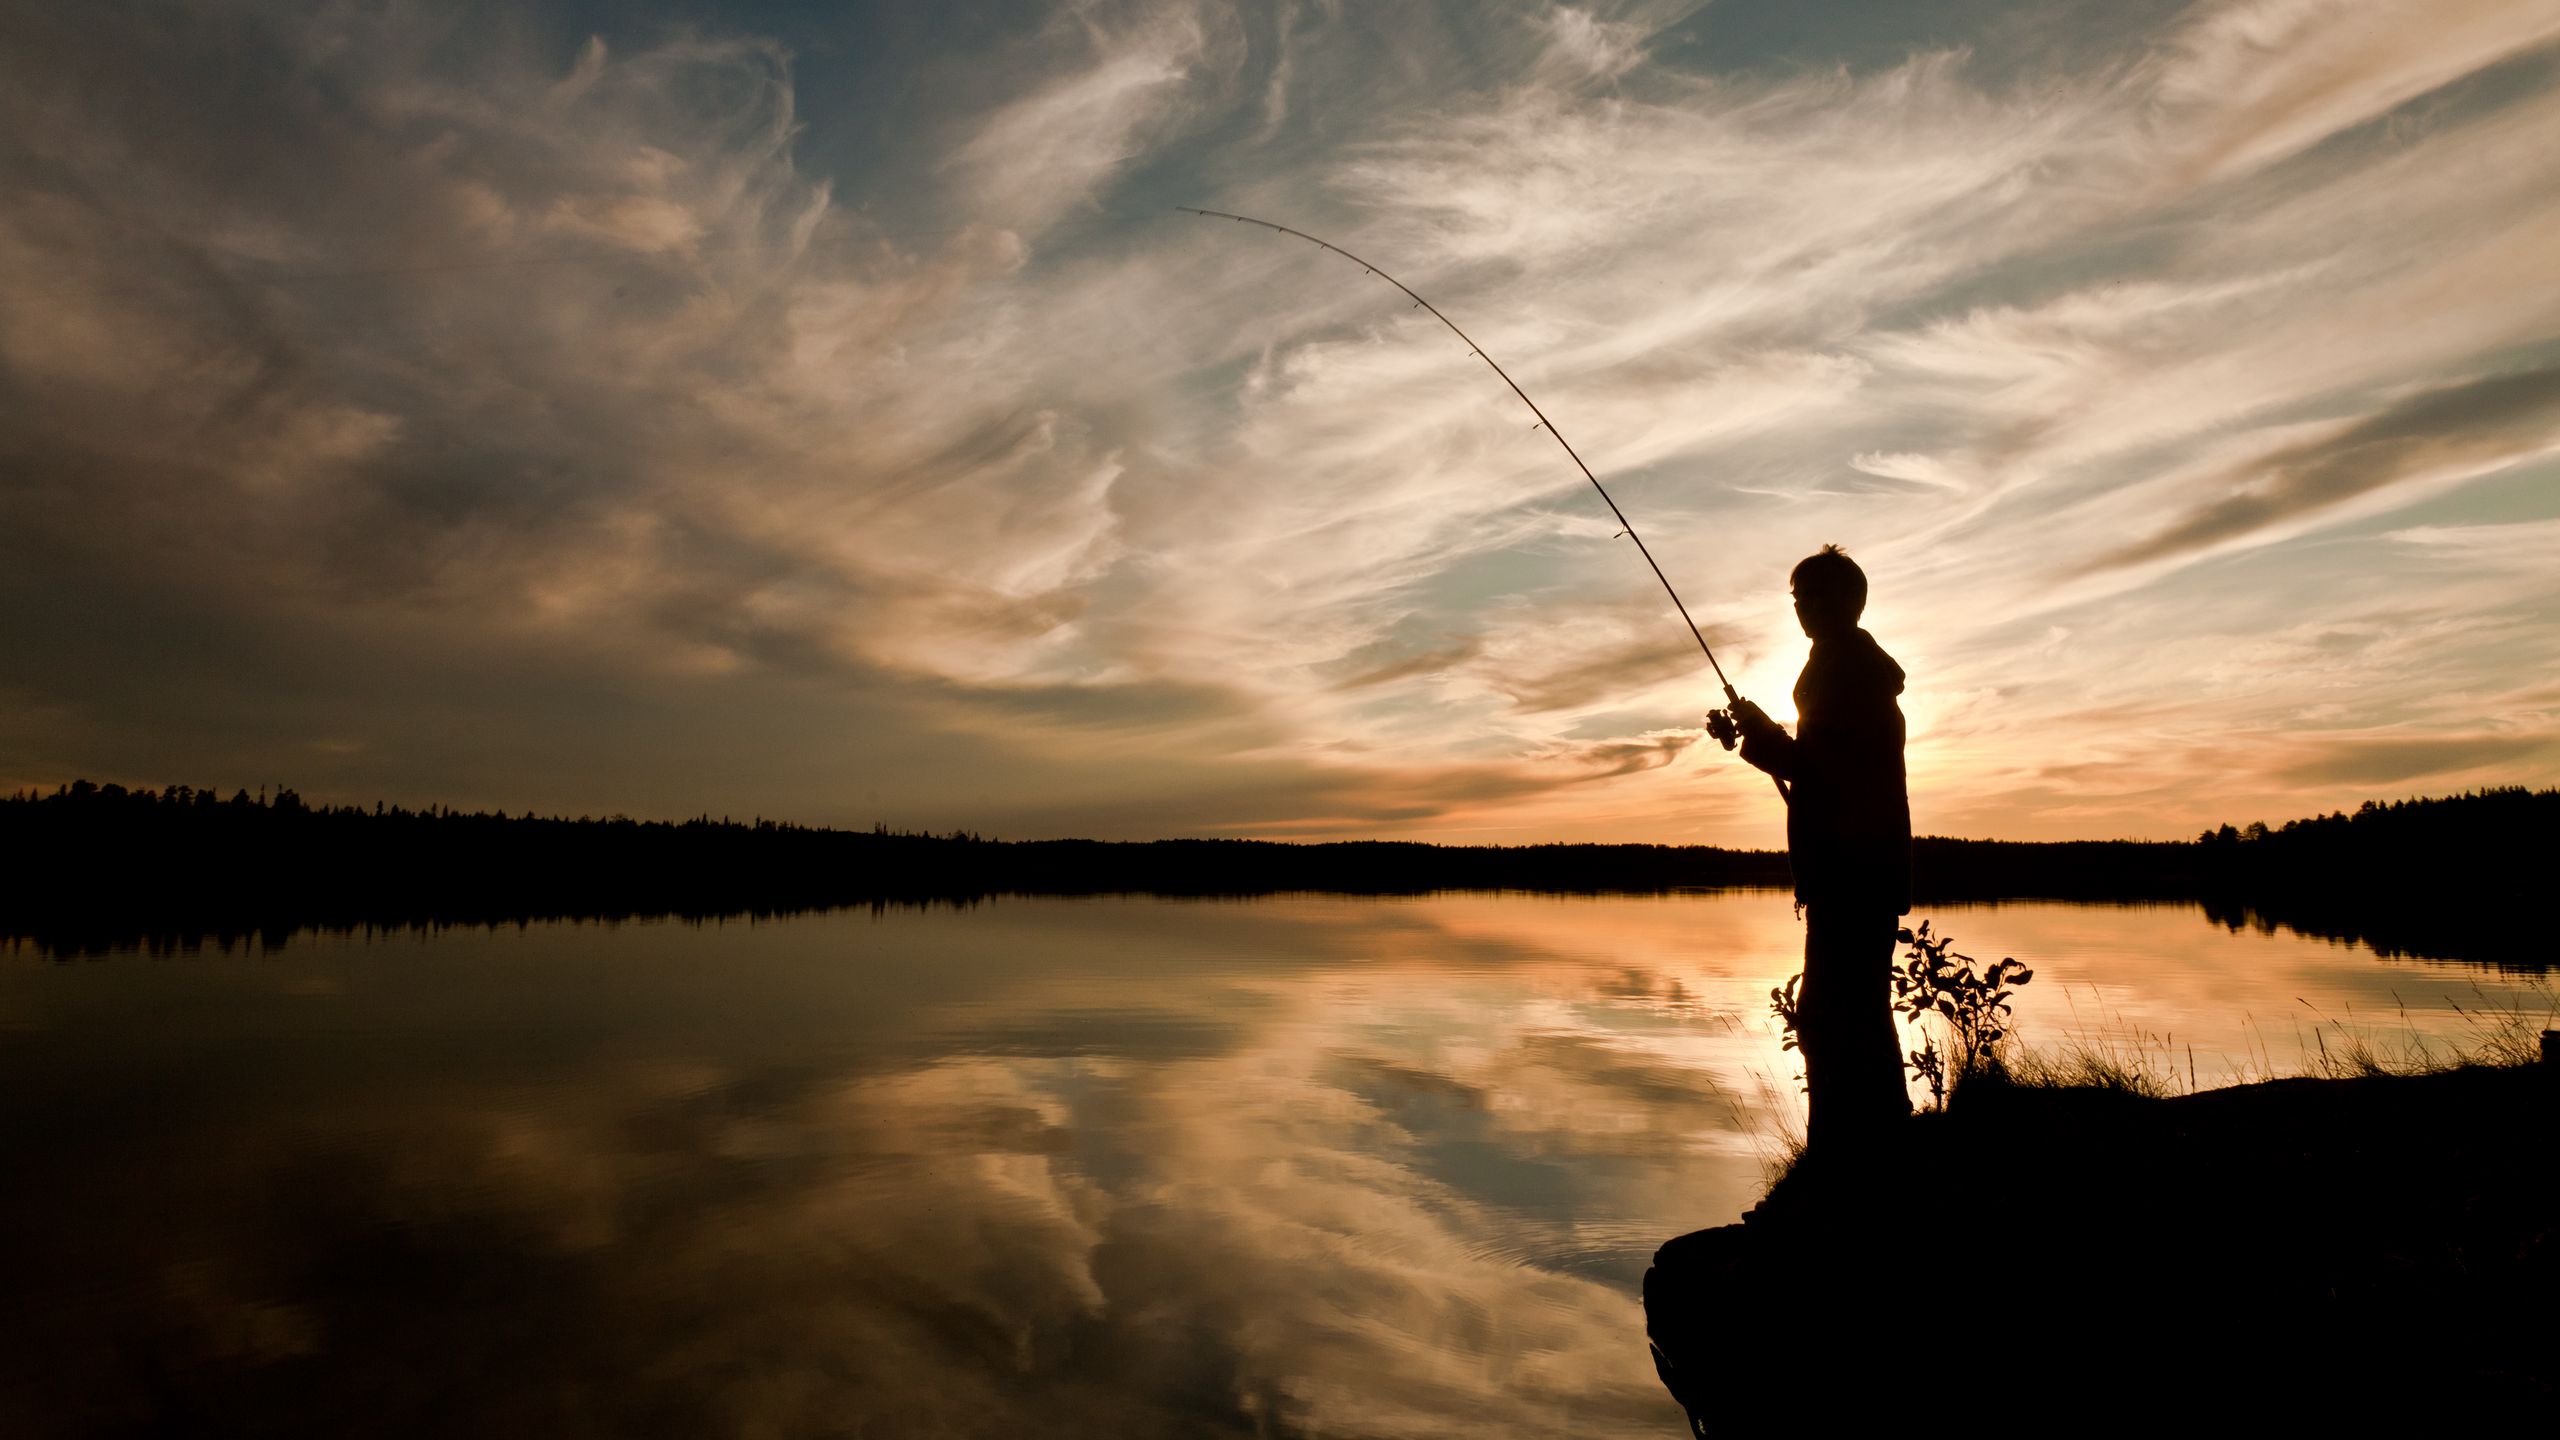 Download wallpaper 2560x1440 silhouette, fisherman, fishing rod, fishing, lake, dark widescreen 16:9 HD background